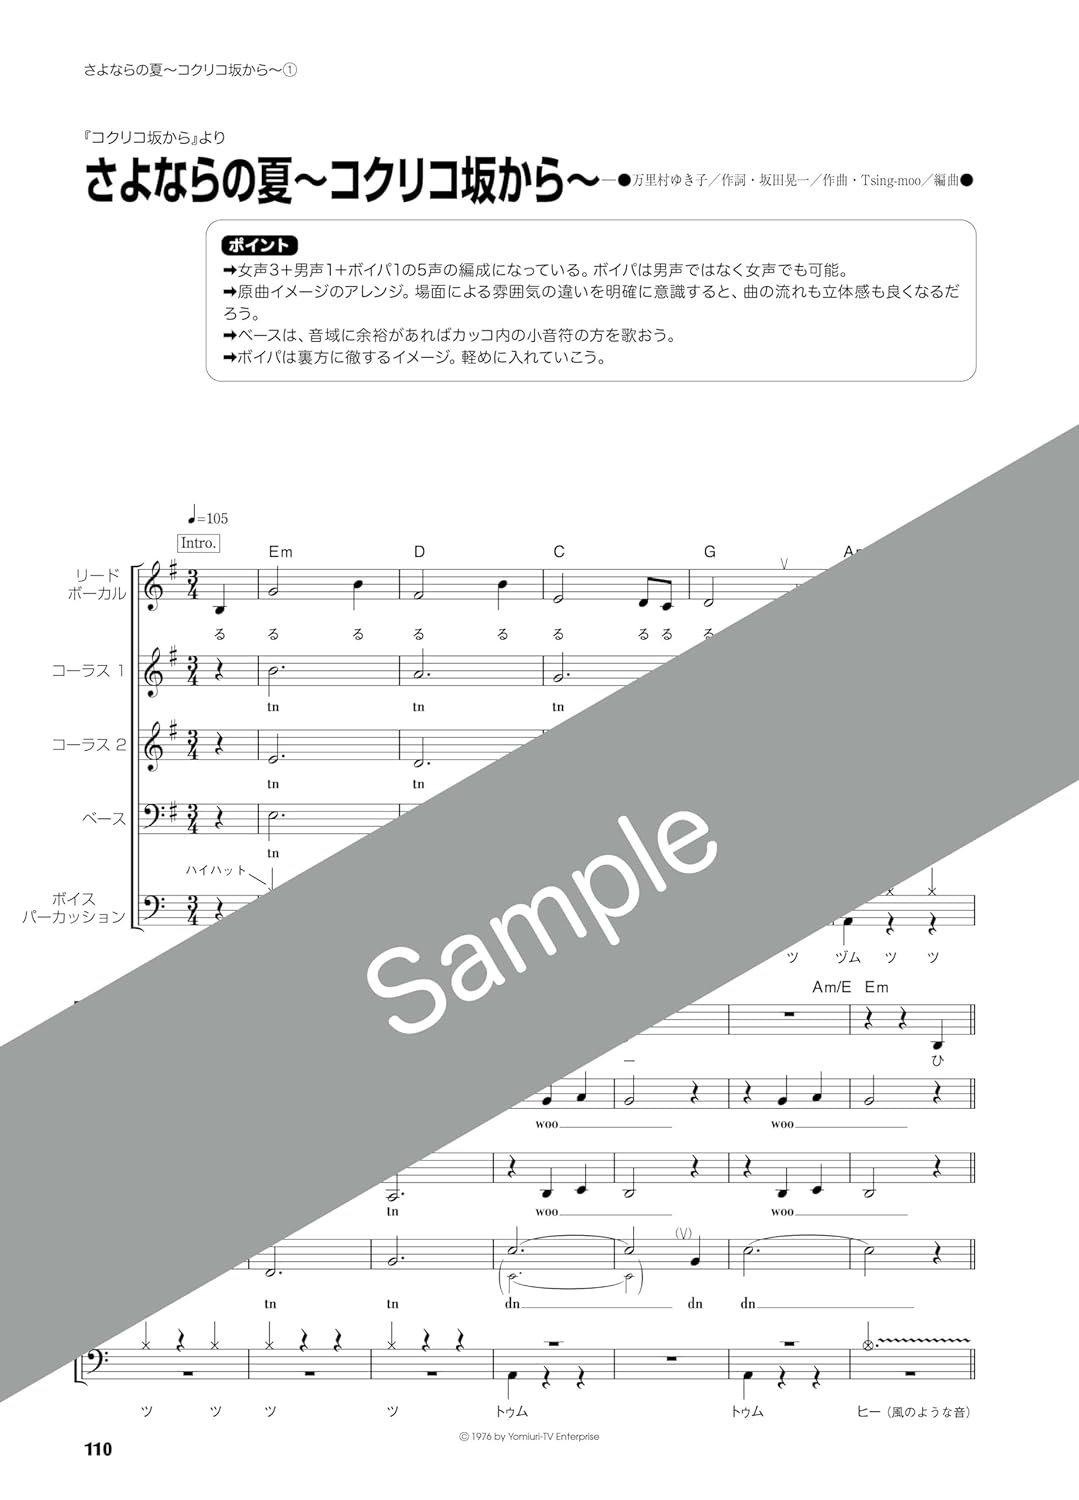 Hayao Miyazaki and Studio Ghibli: A Cappella Chorus Sheet Music Book